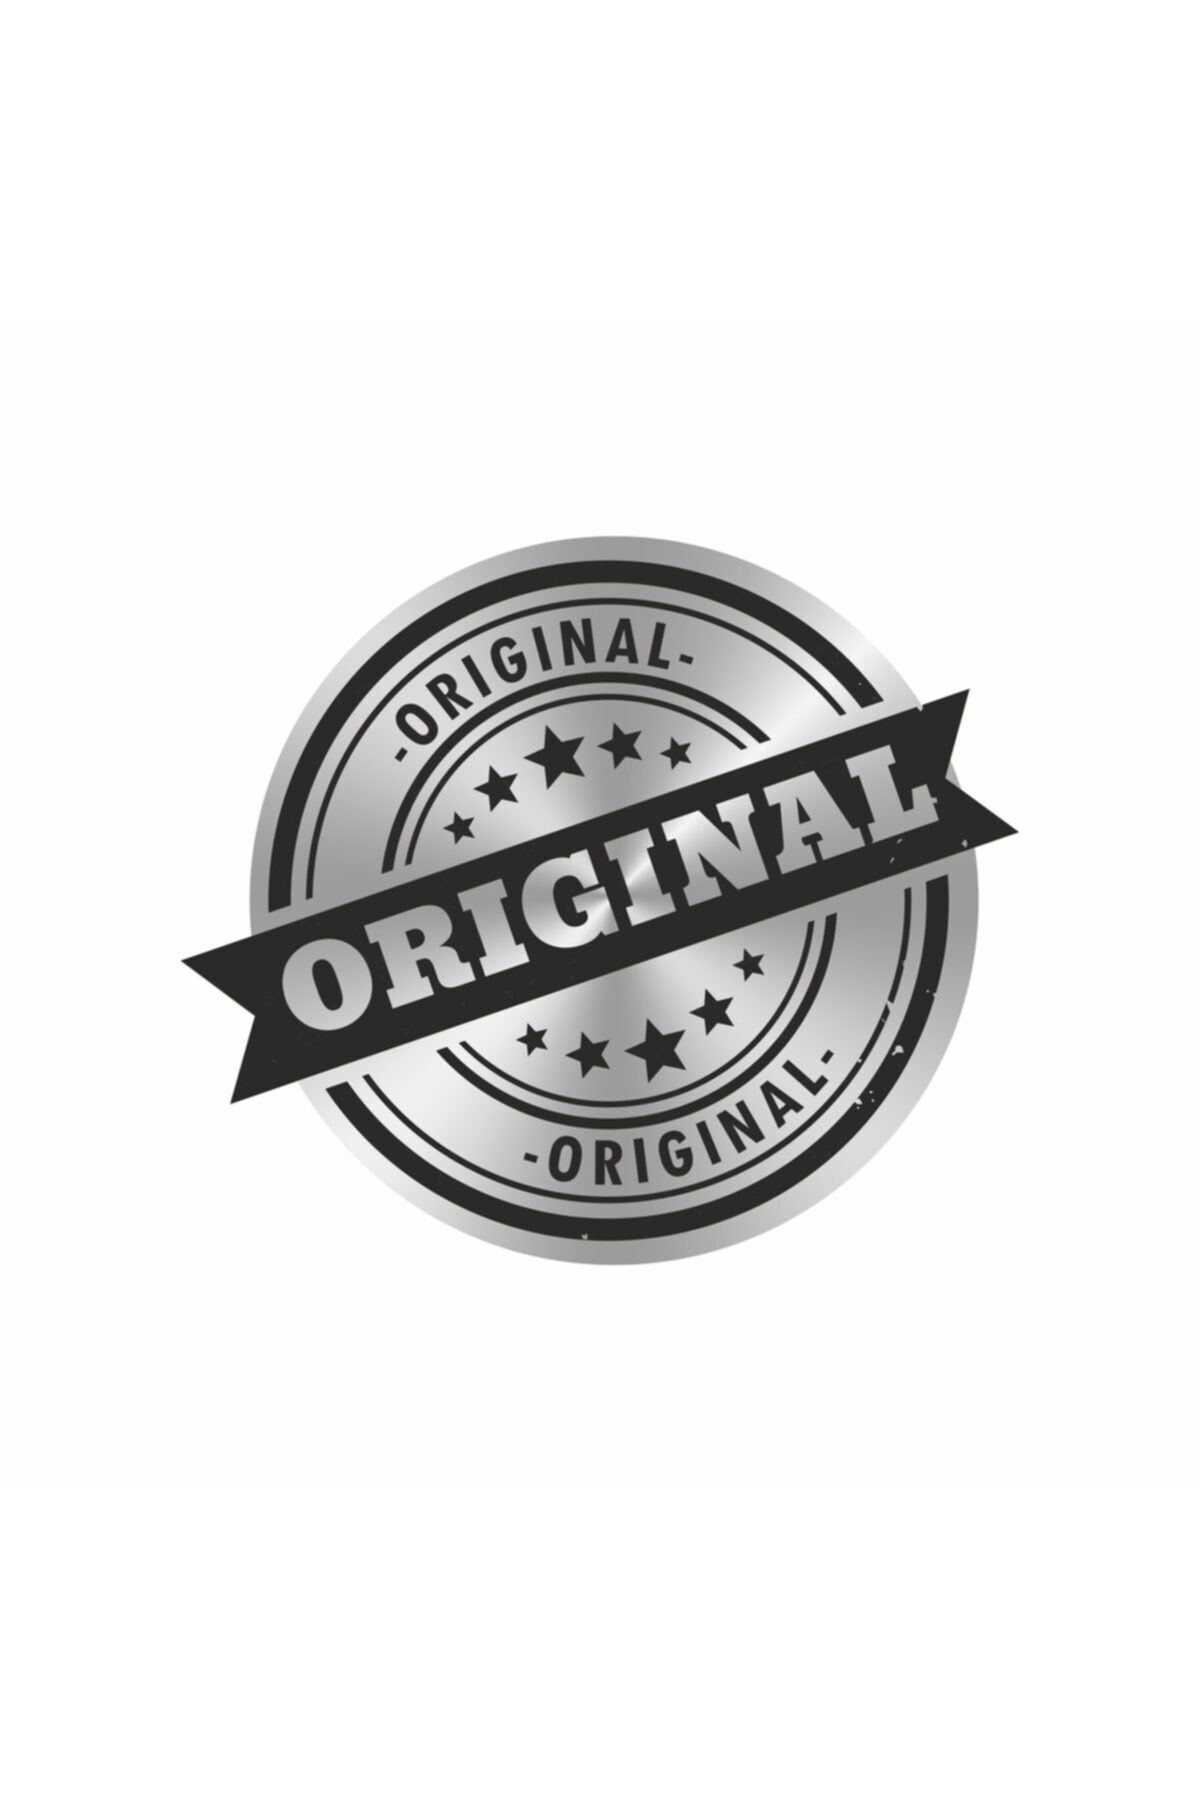 3M Orjinal Orginal Ürün Etiketi Gümüş Etiket 3x3 Cm 1 Paket 1000